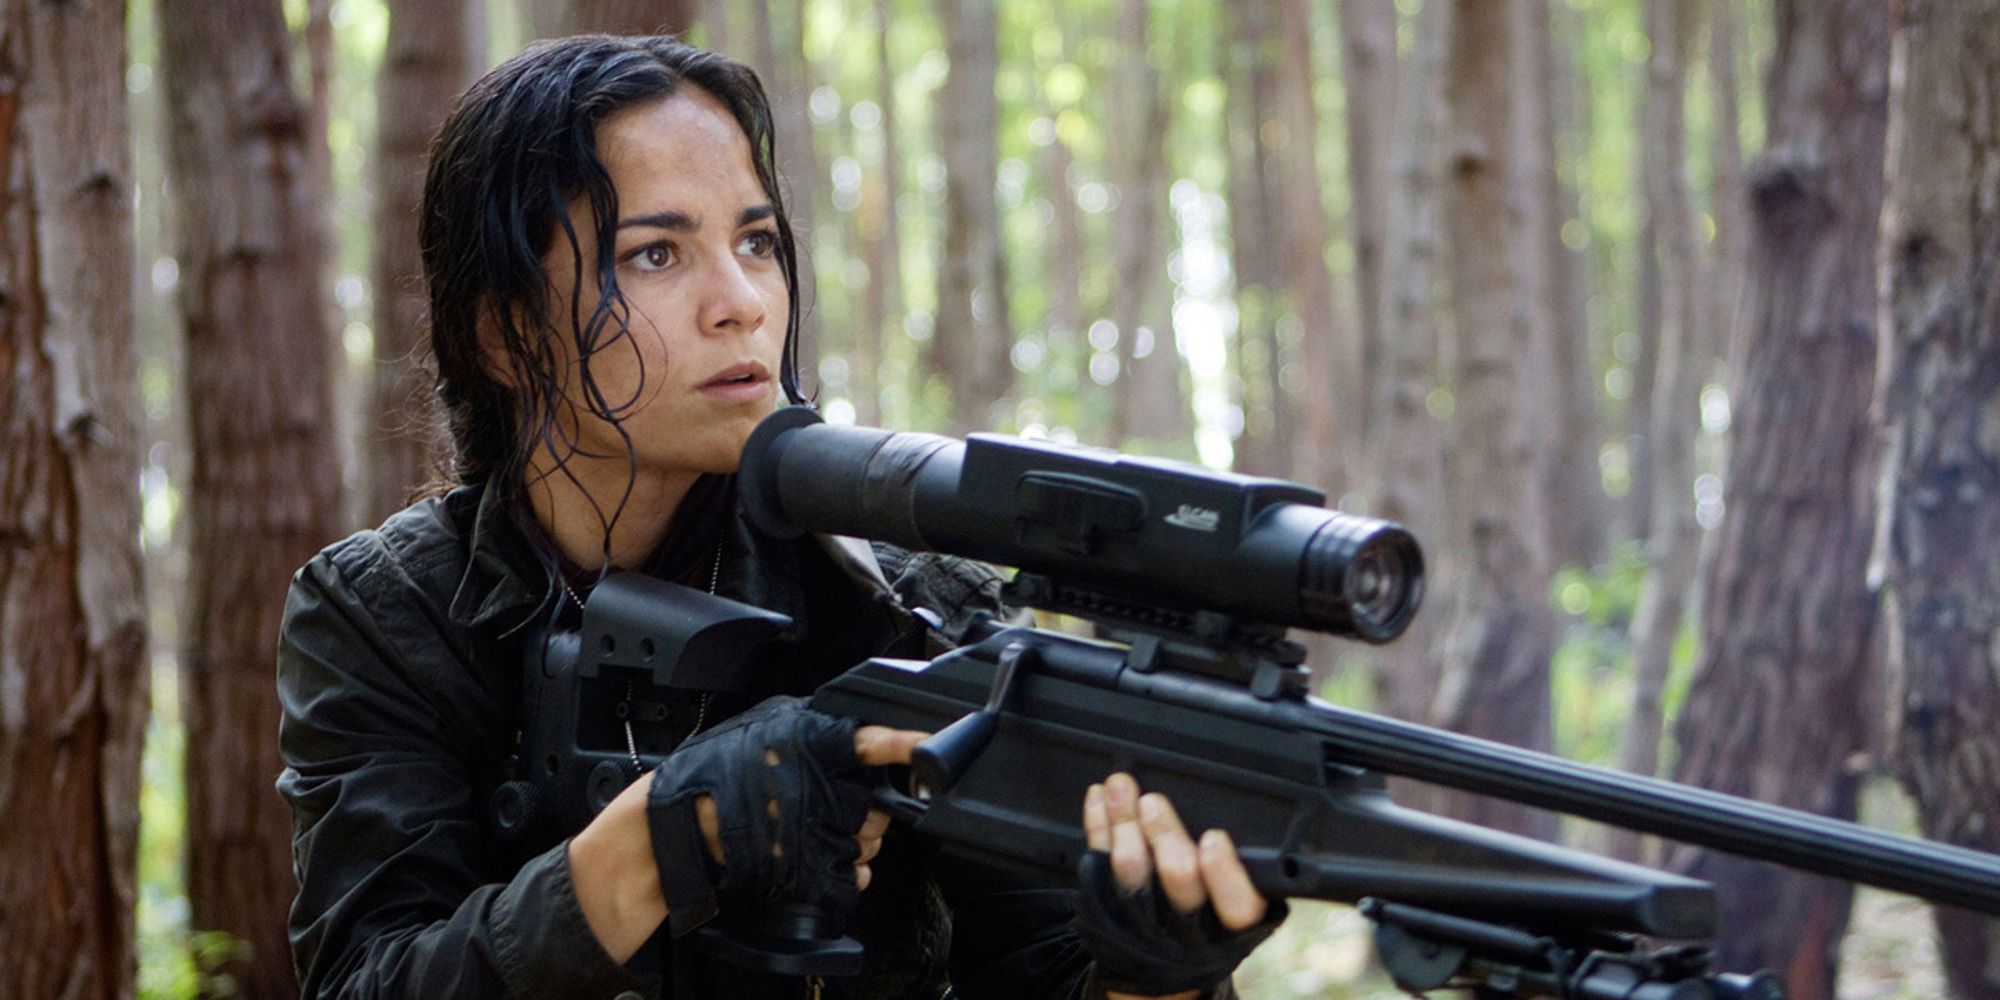 Isabelle wielding her sniper rifle in Predators 2010